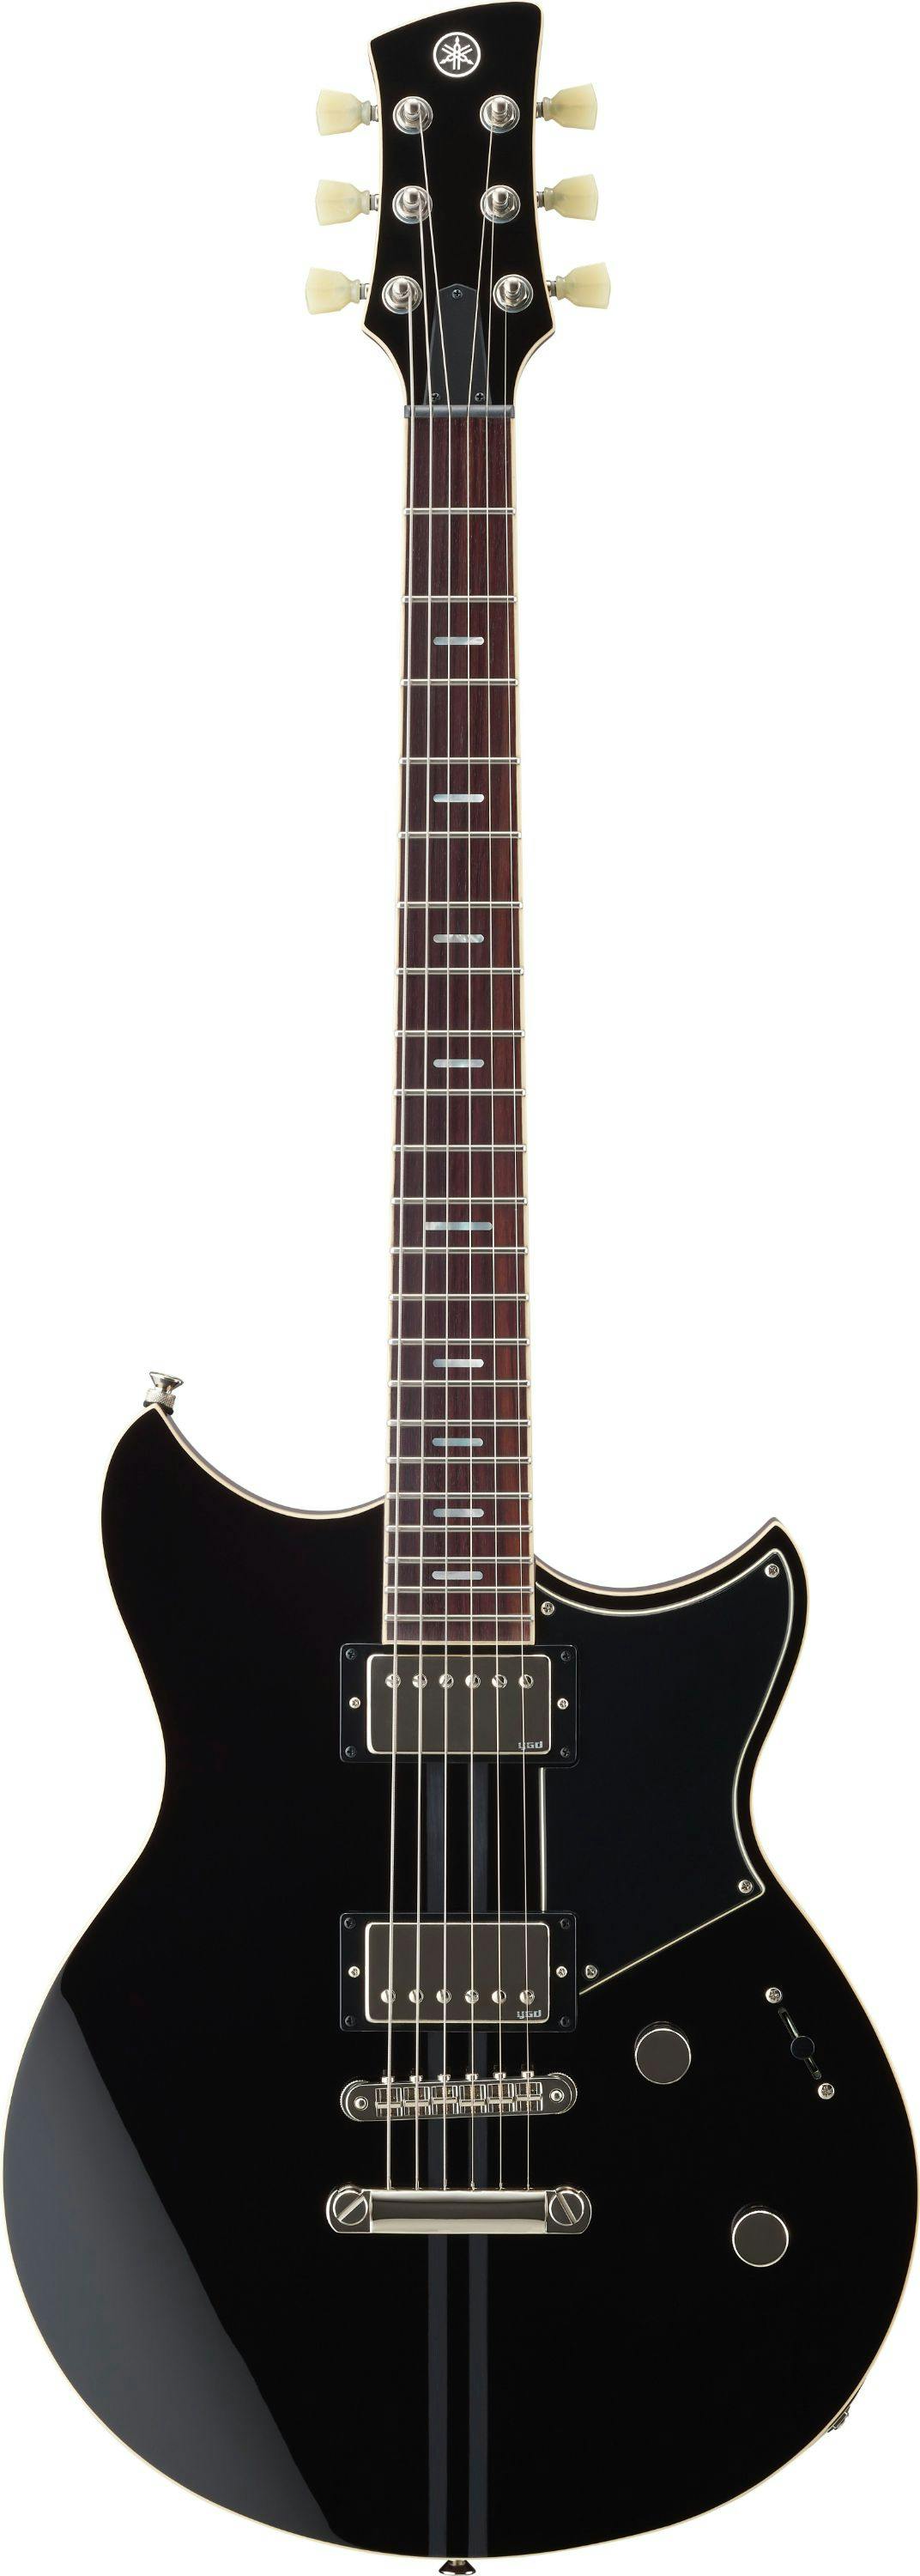 Yamaha Revstar Standard RSS20 Electric Guitar in Black 